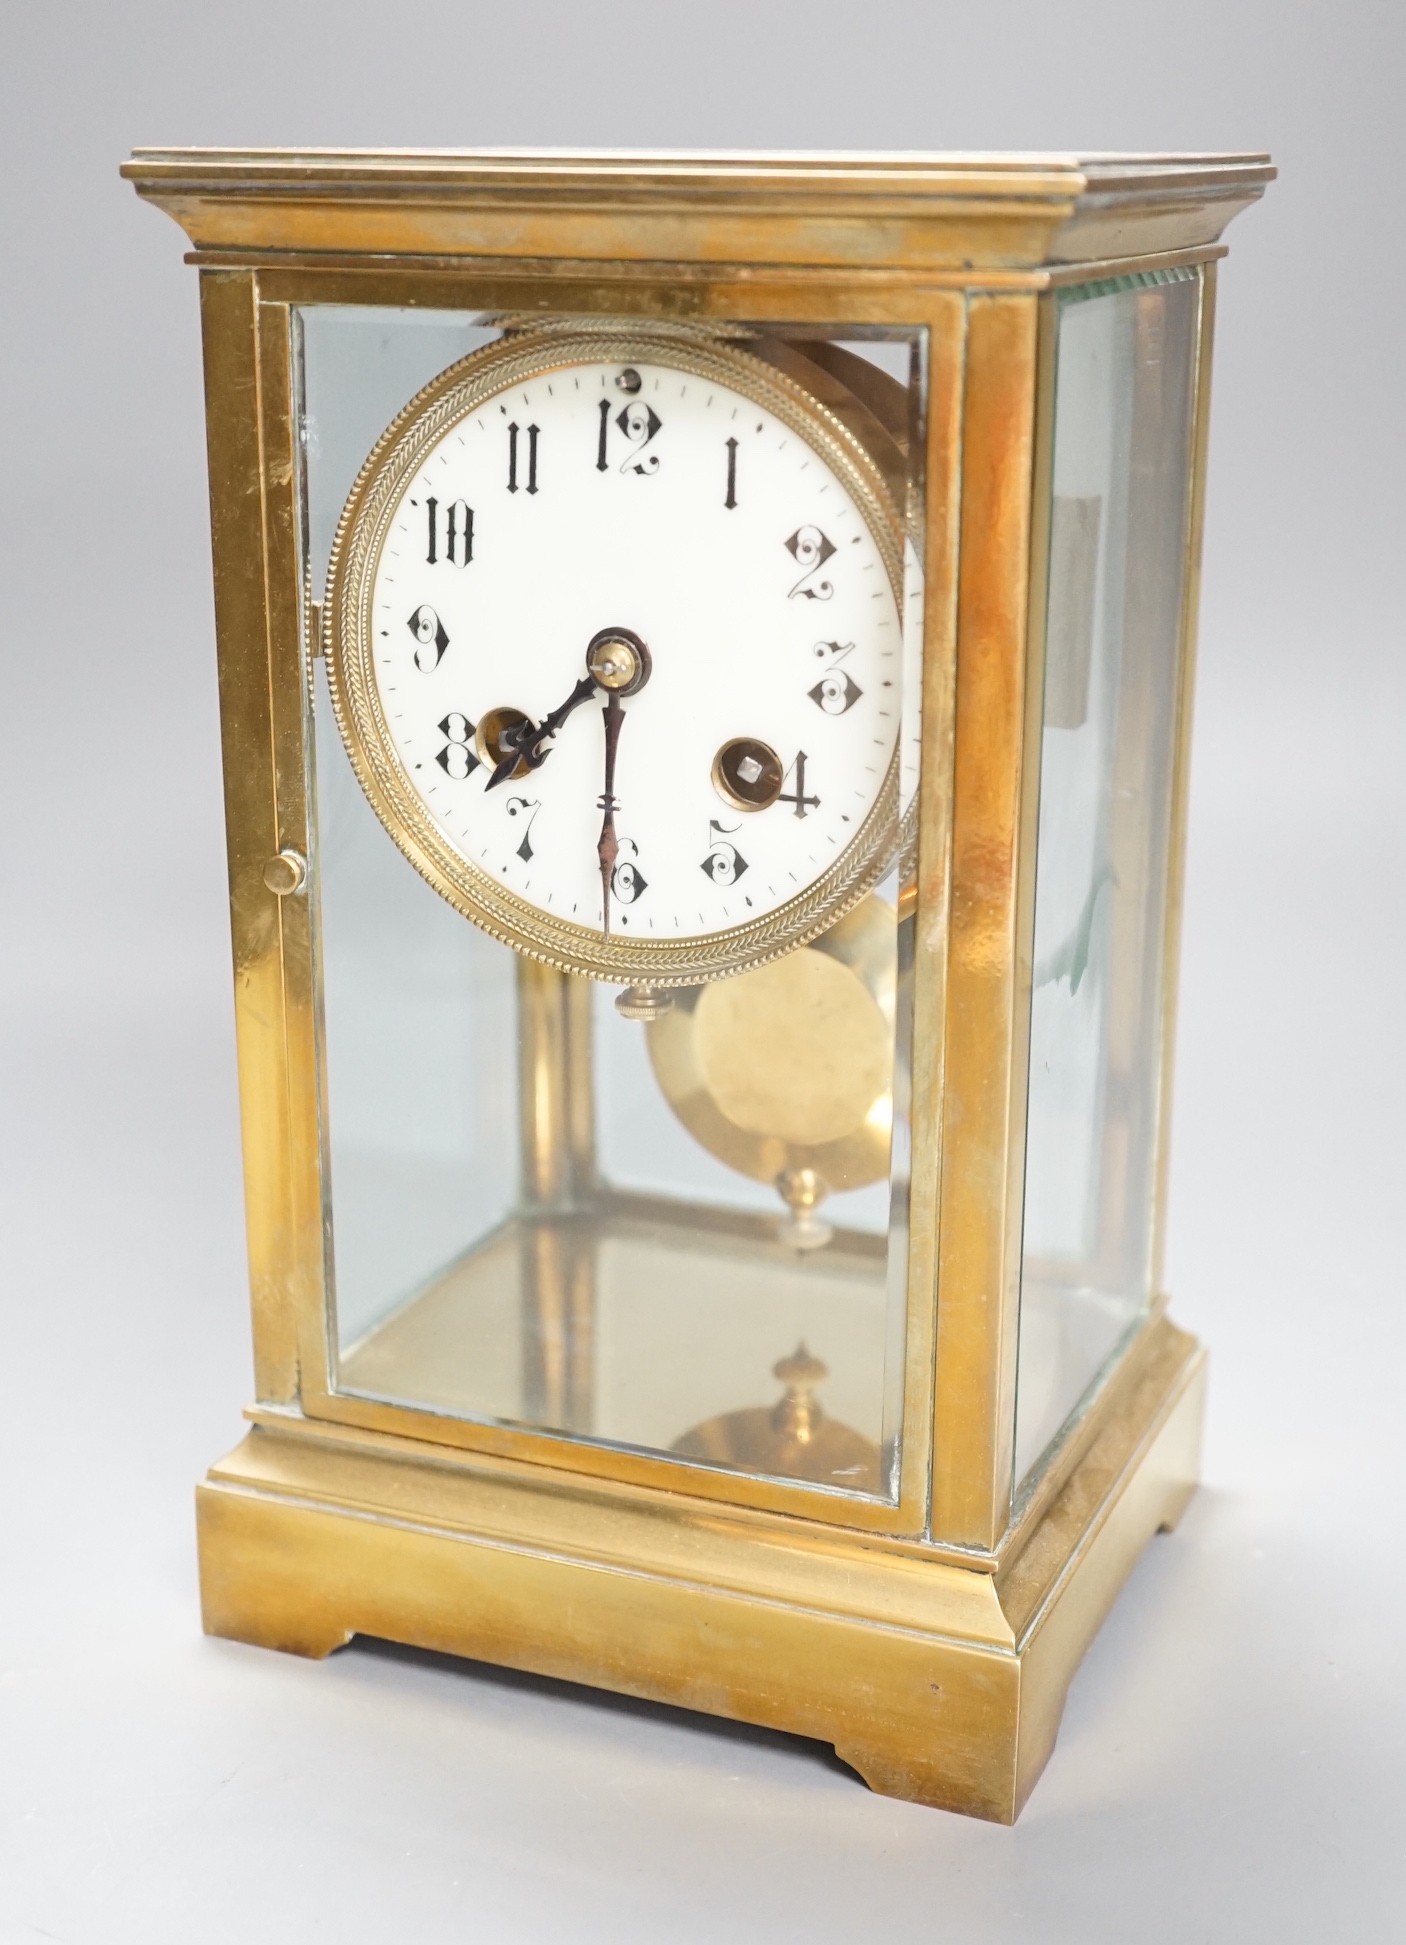 A French brass four glass mantel clock, 23cms high